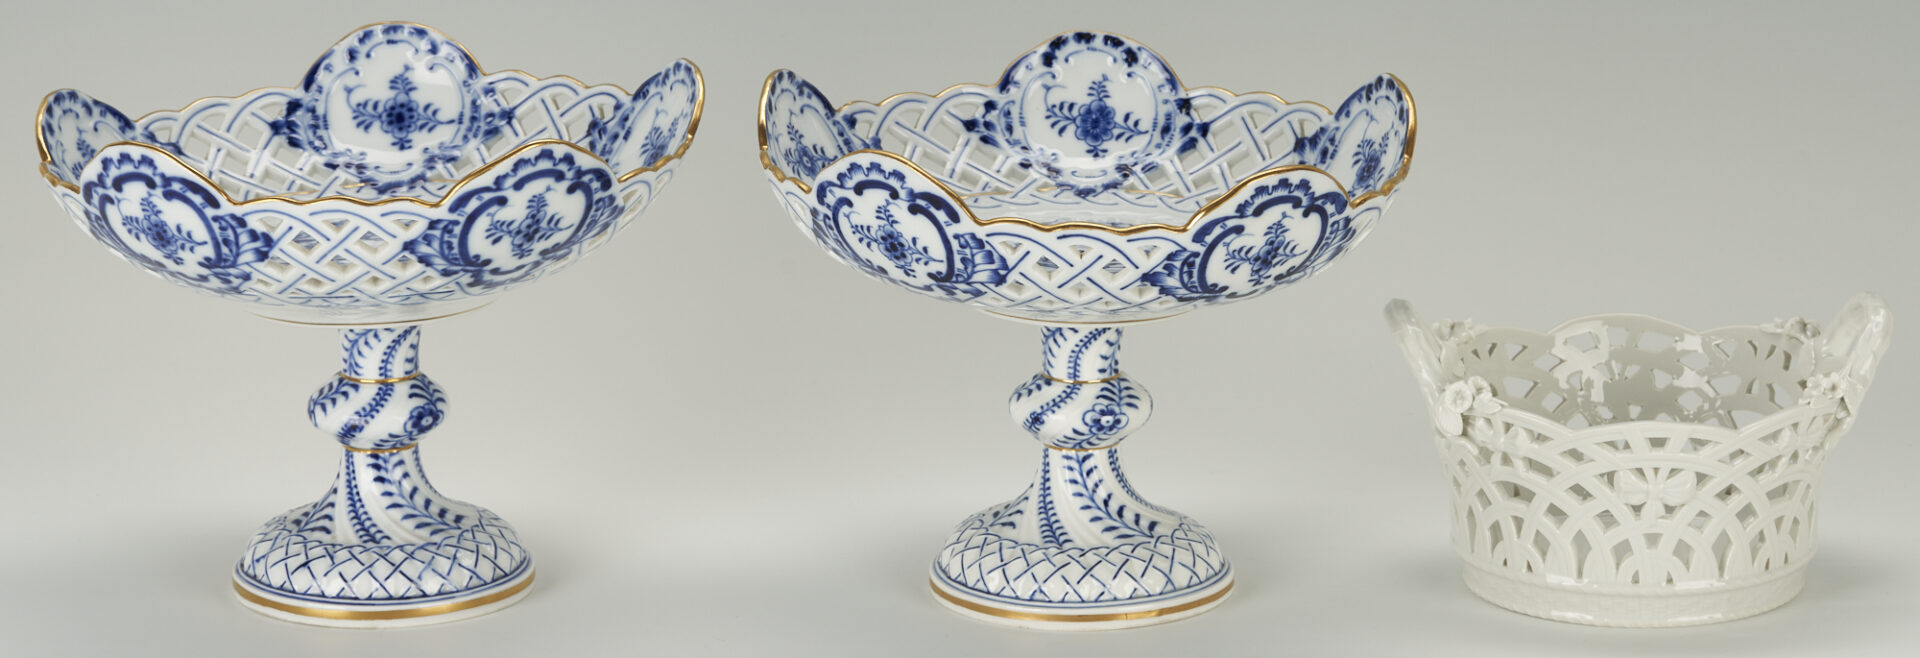 Lot 1000: 19 Pieces of German Porcelain, Mostly Meissen Blue Onion